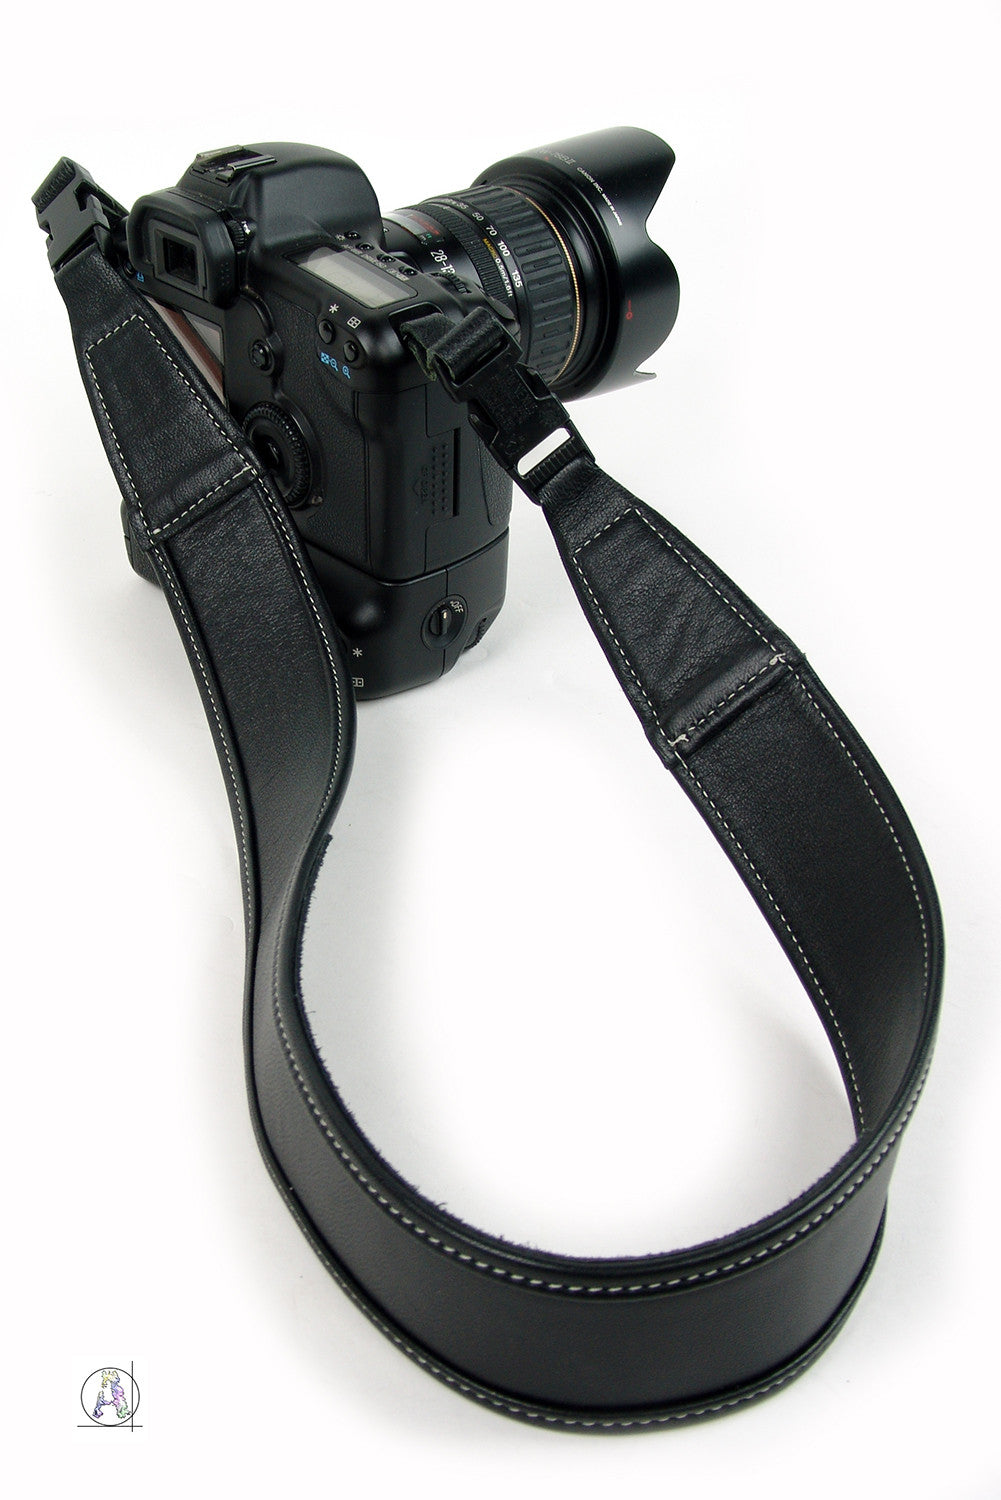 Blackheart Regular Bone Stitch - Soft Black Leather Camera Strap with Bone Stitching